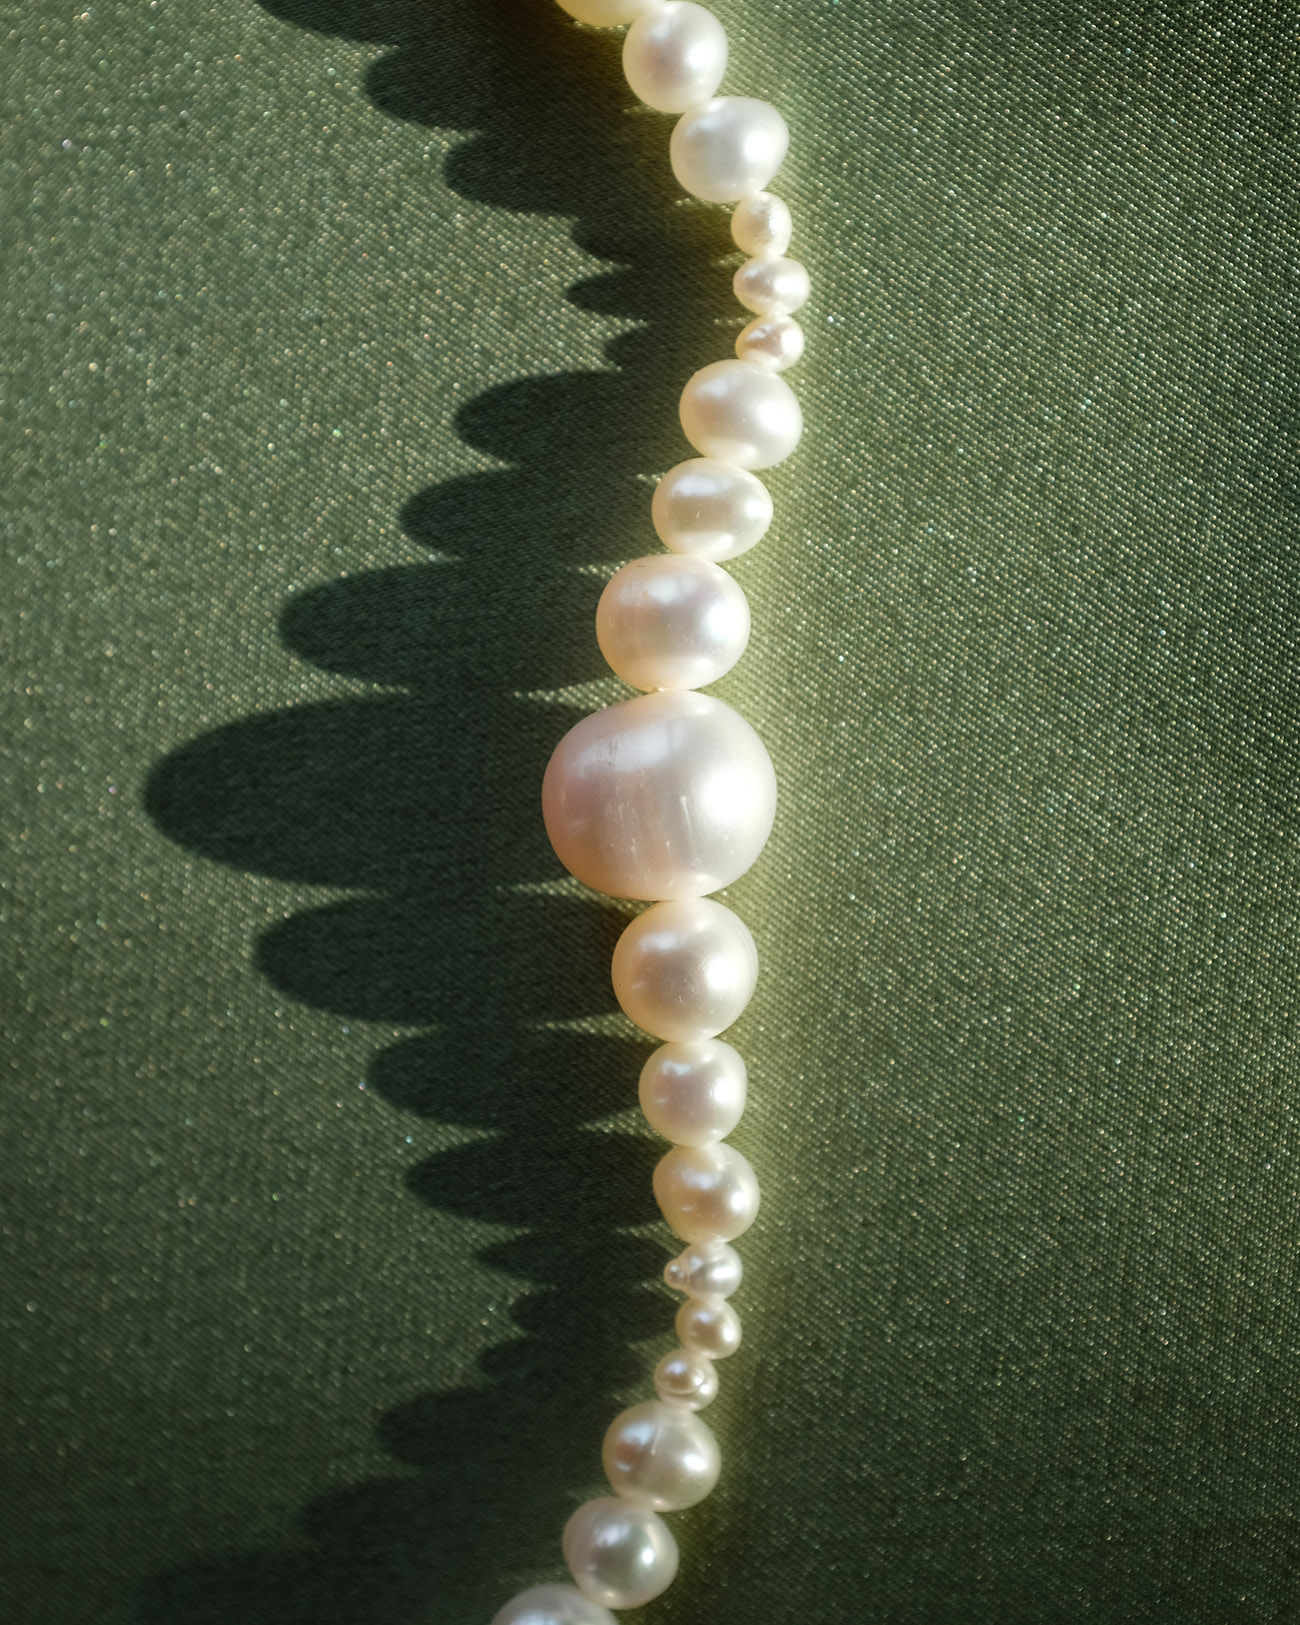 metaformi_design_jewelry_bubbles_pearl_necklace_lifestyle_2